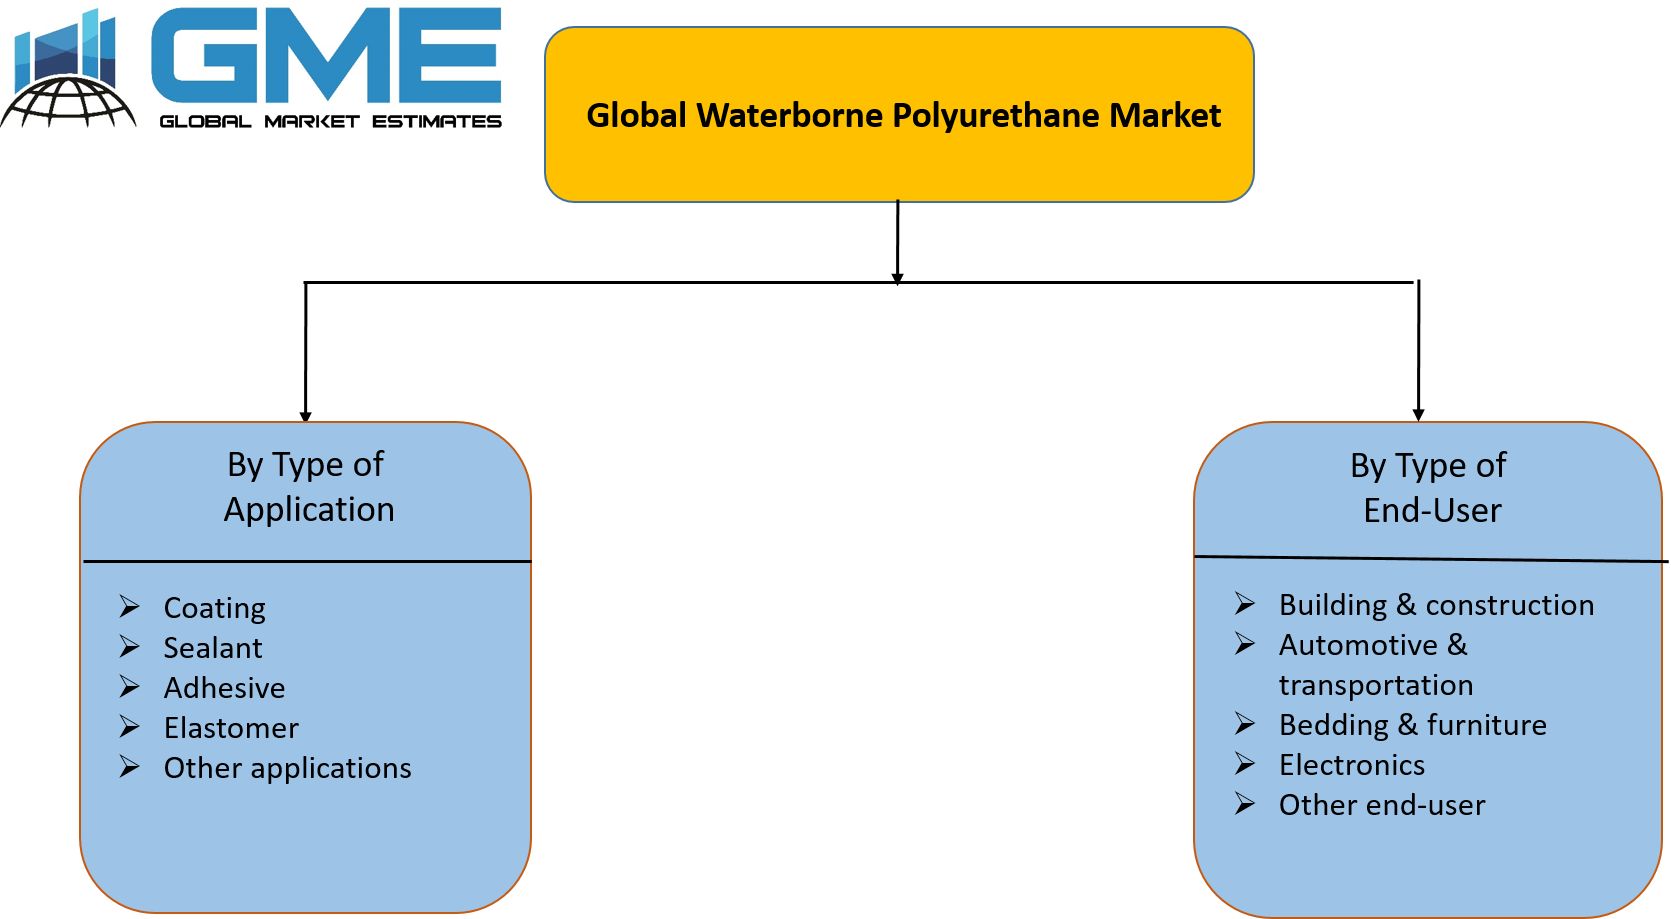 Global Waterborne Polyurethane Market Segmentation